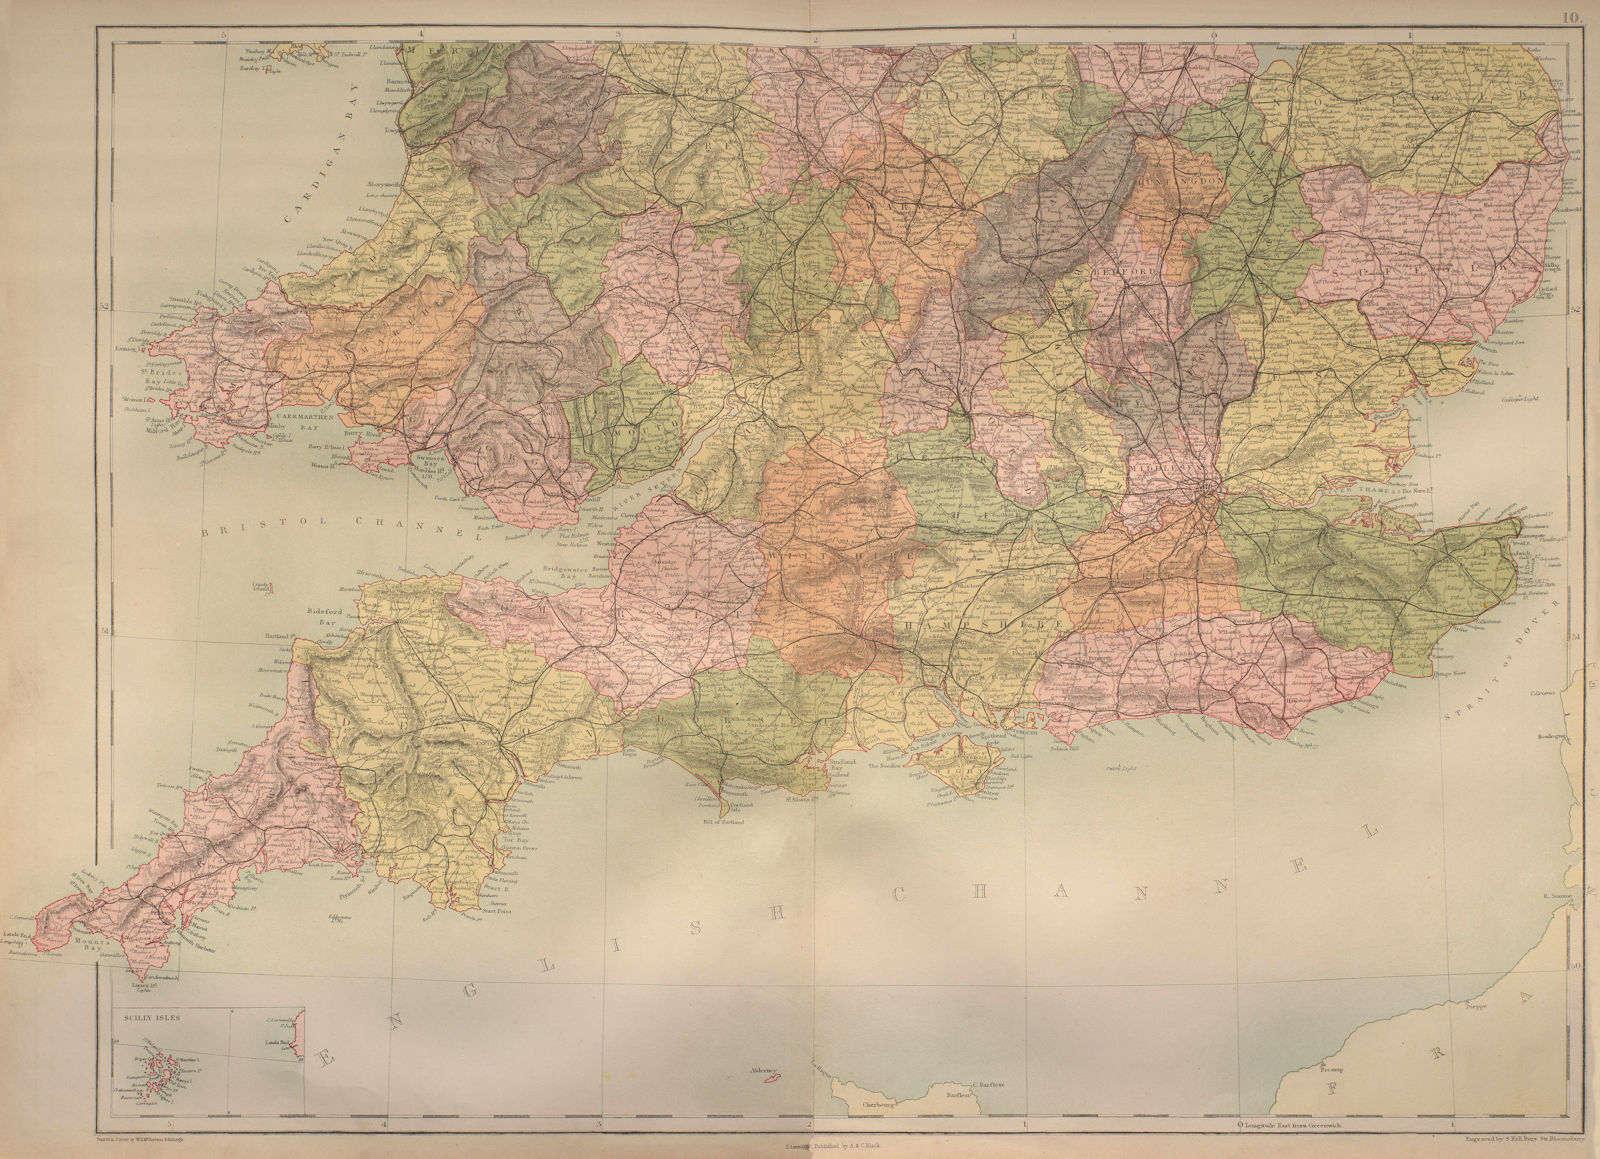 Associate Product England & Wales South Sheet. Counties & railways. BARTHOLOMEW 1870 old map